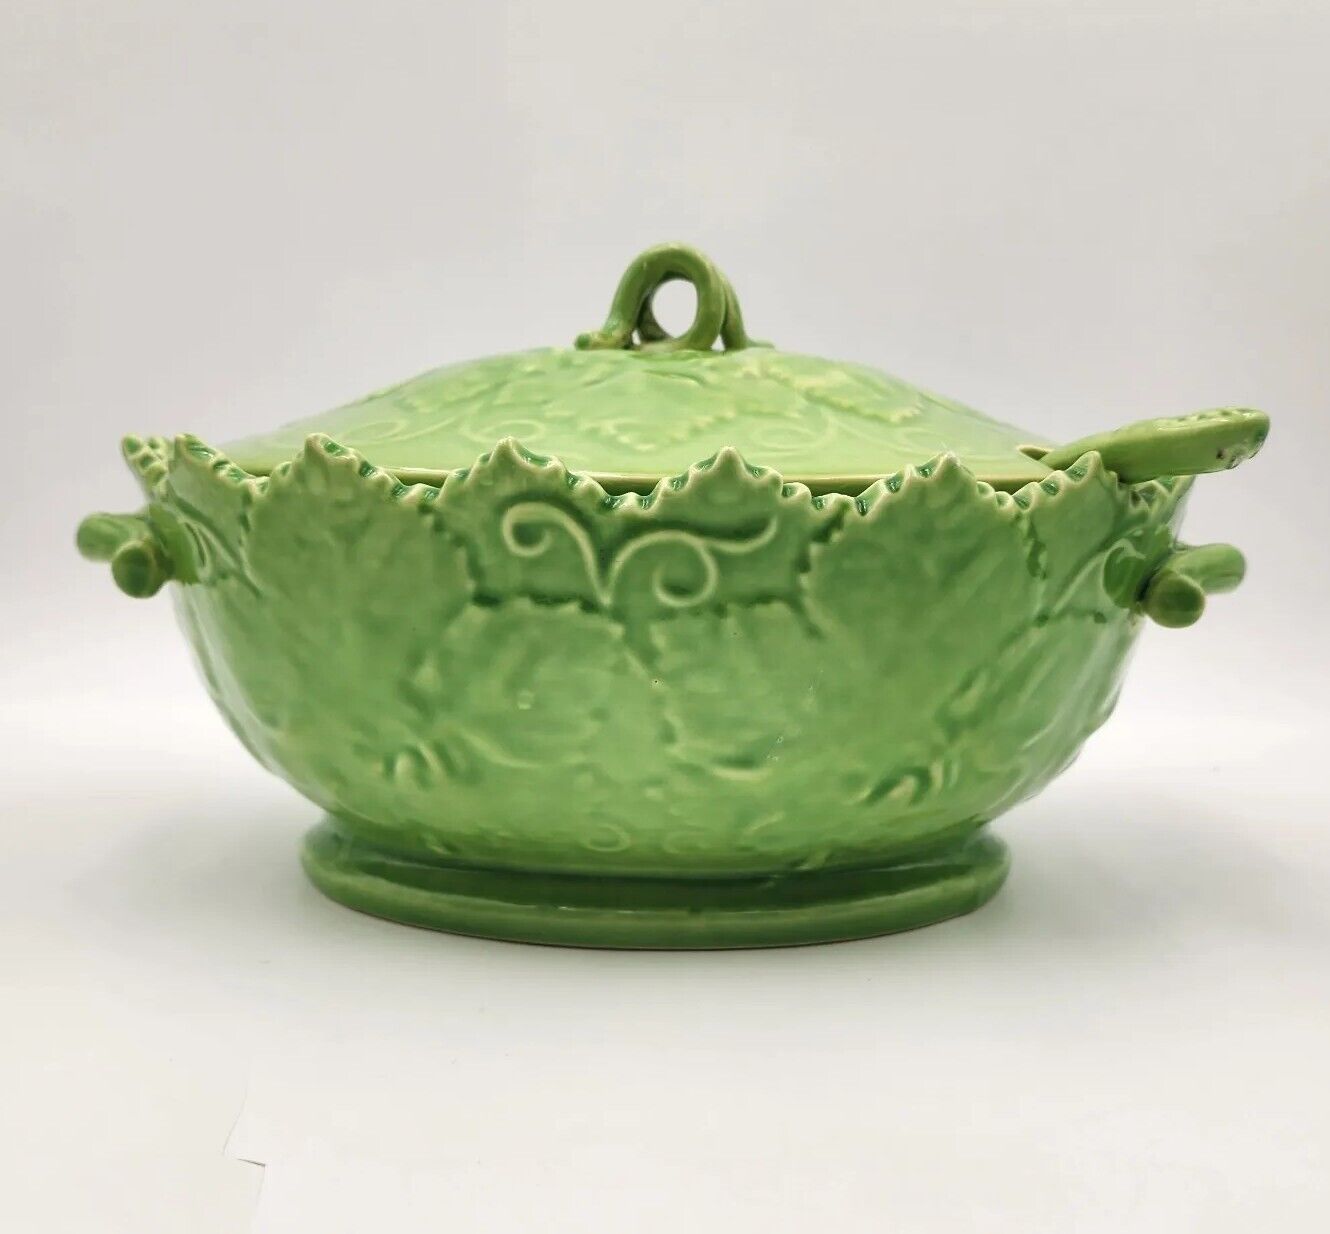 Vintage Olfaire Covered Tureen & Ladle Portugal Handmade Ceramic Majolica Green